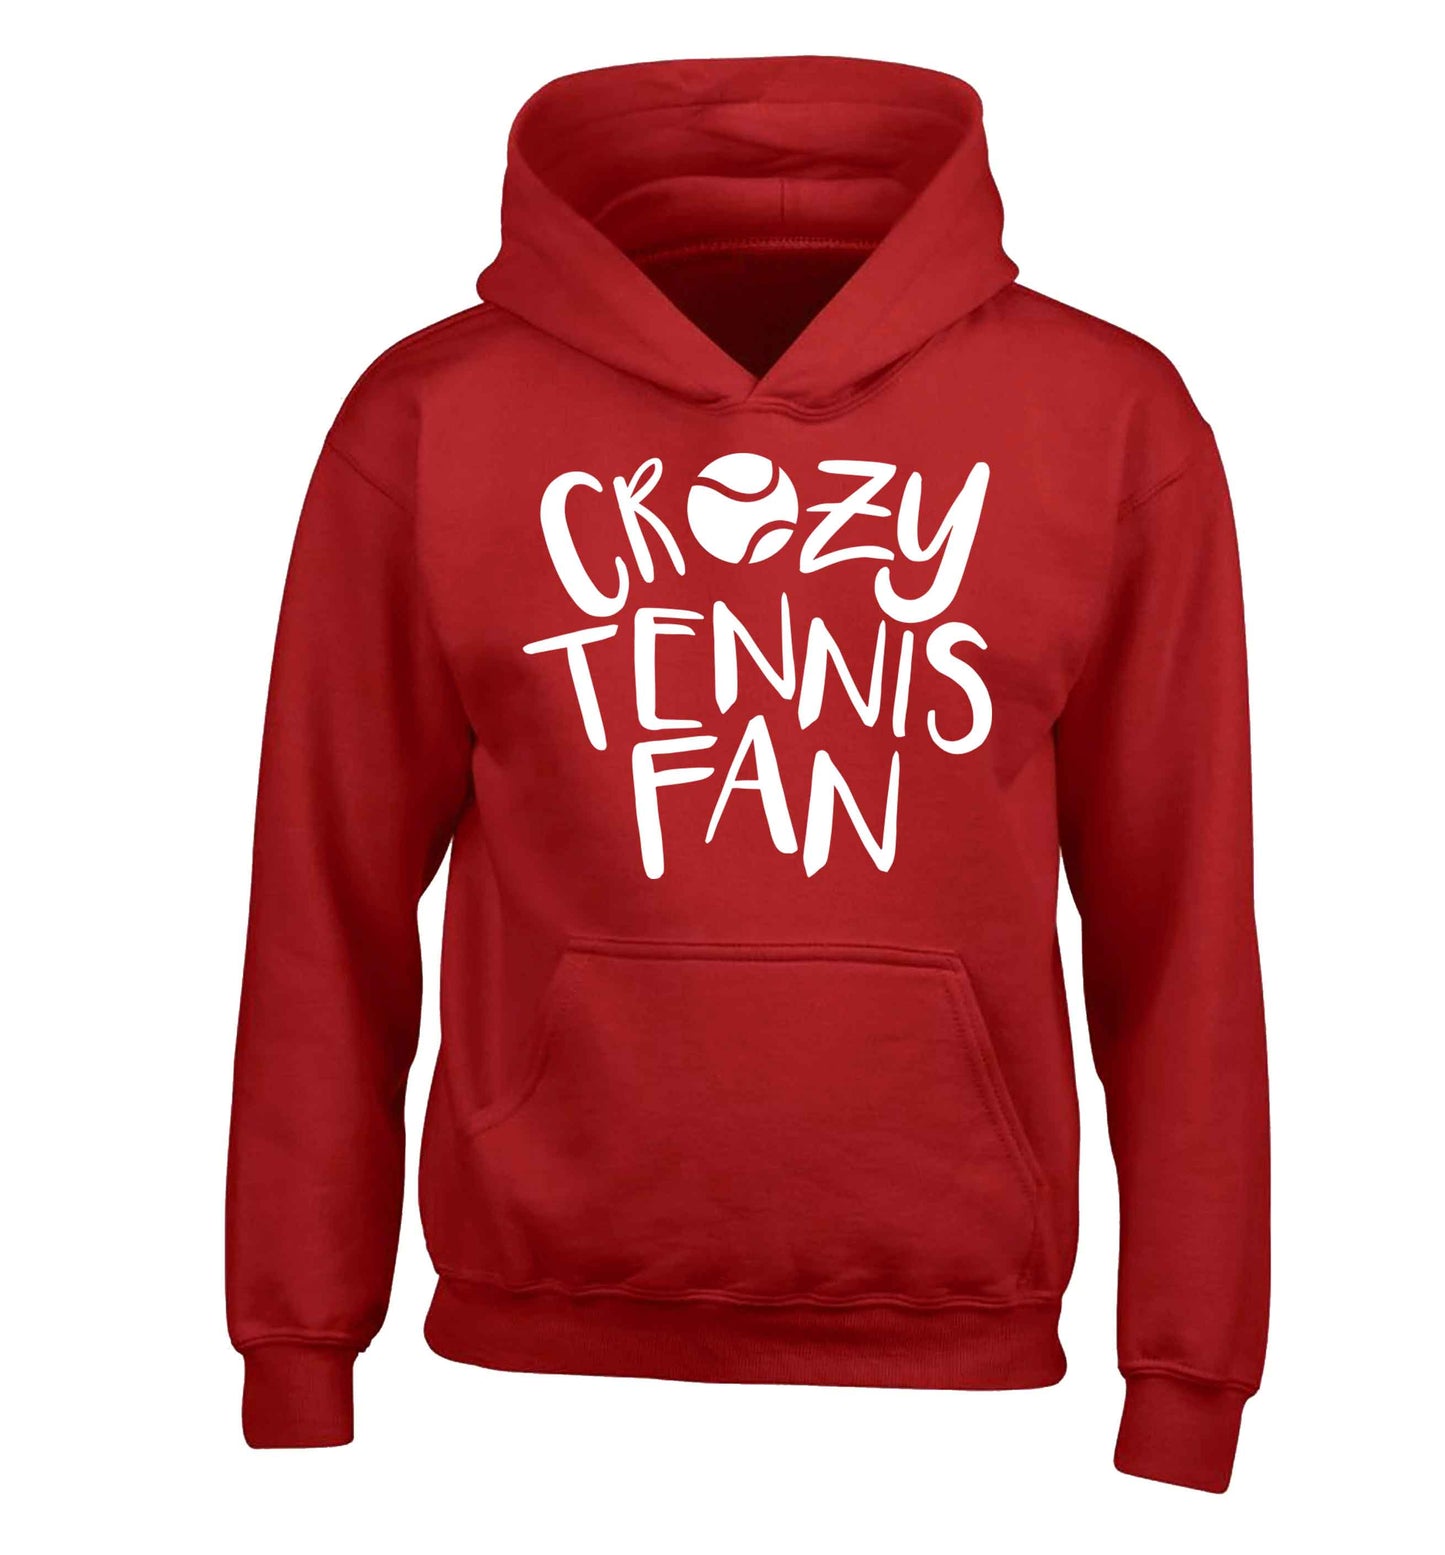 Crazy tennis fan children's red hoodie 12-13 Years